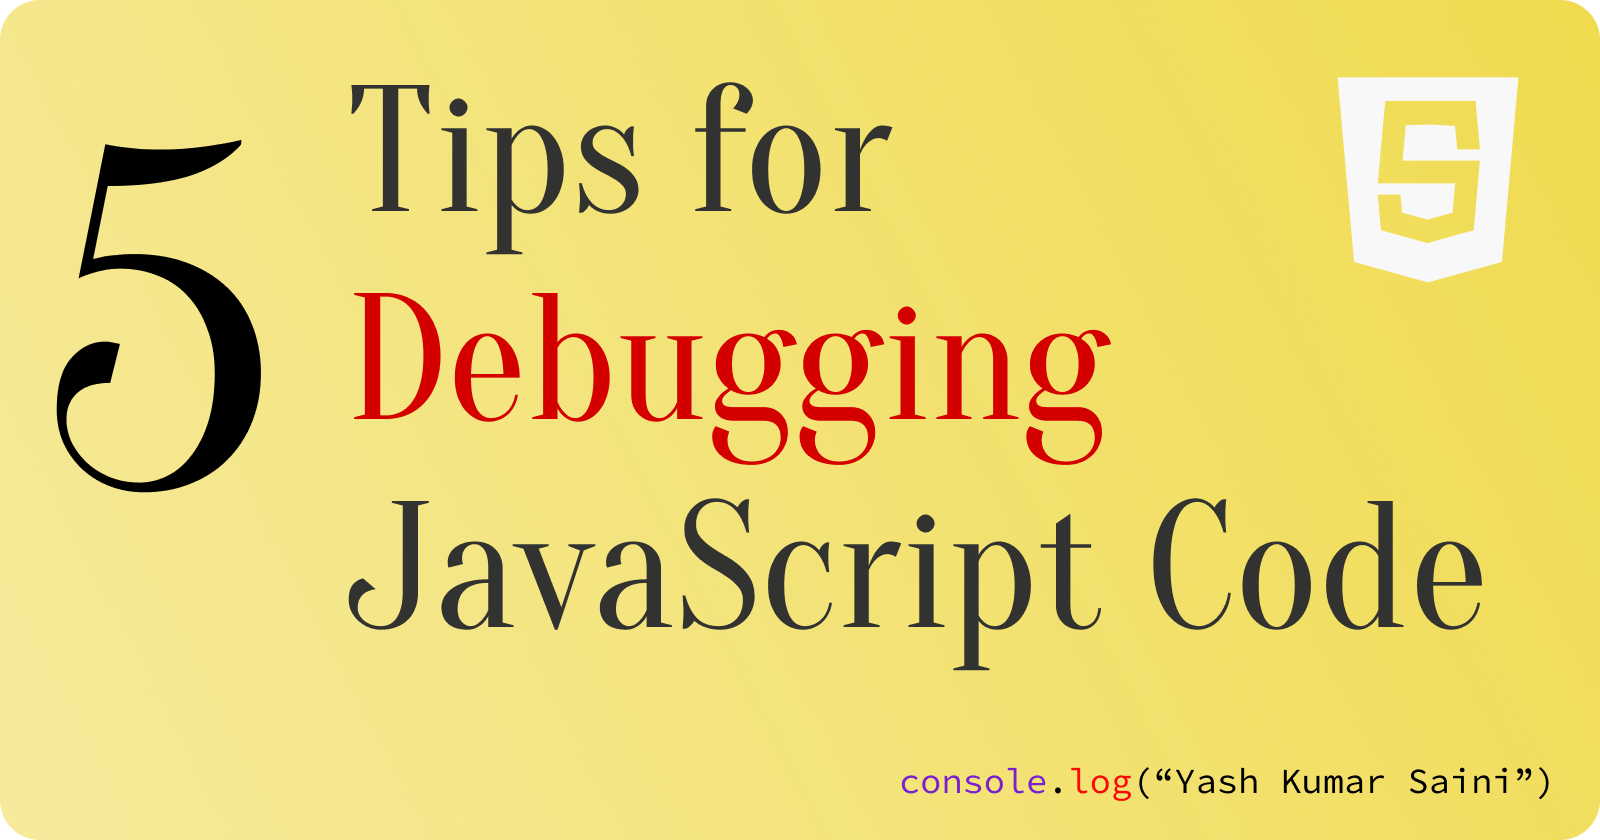 5 Tips for Debugging JavaScript Code